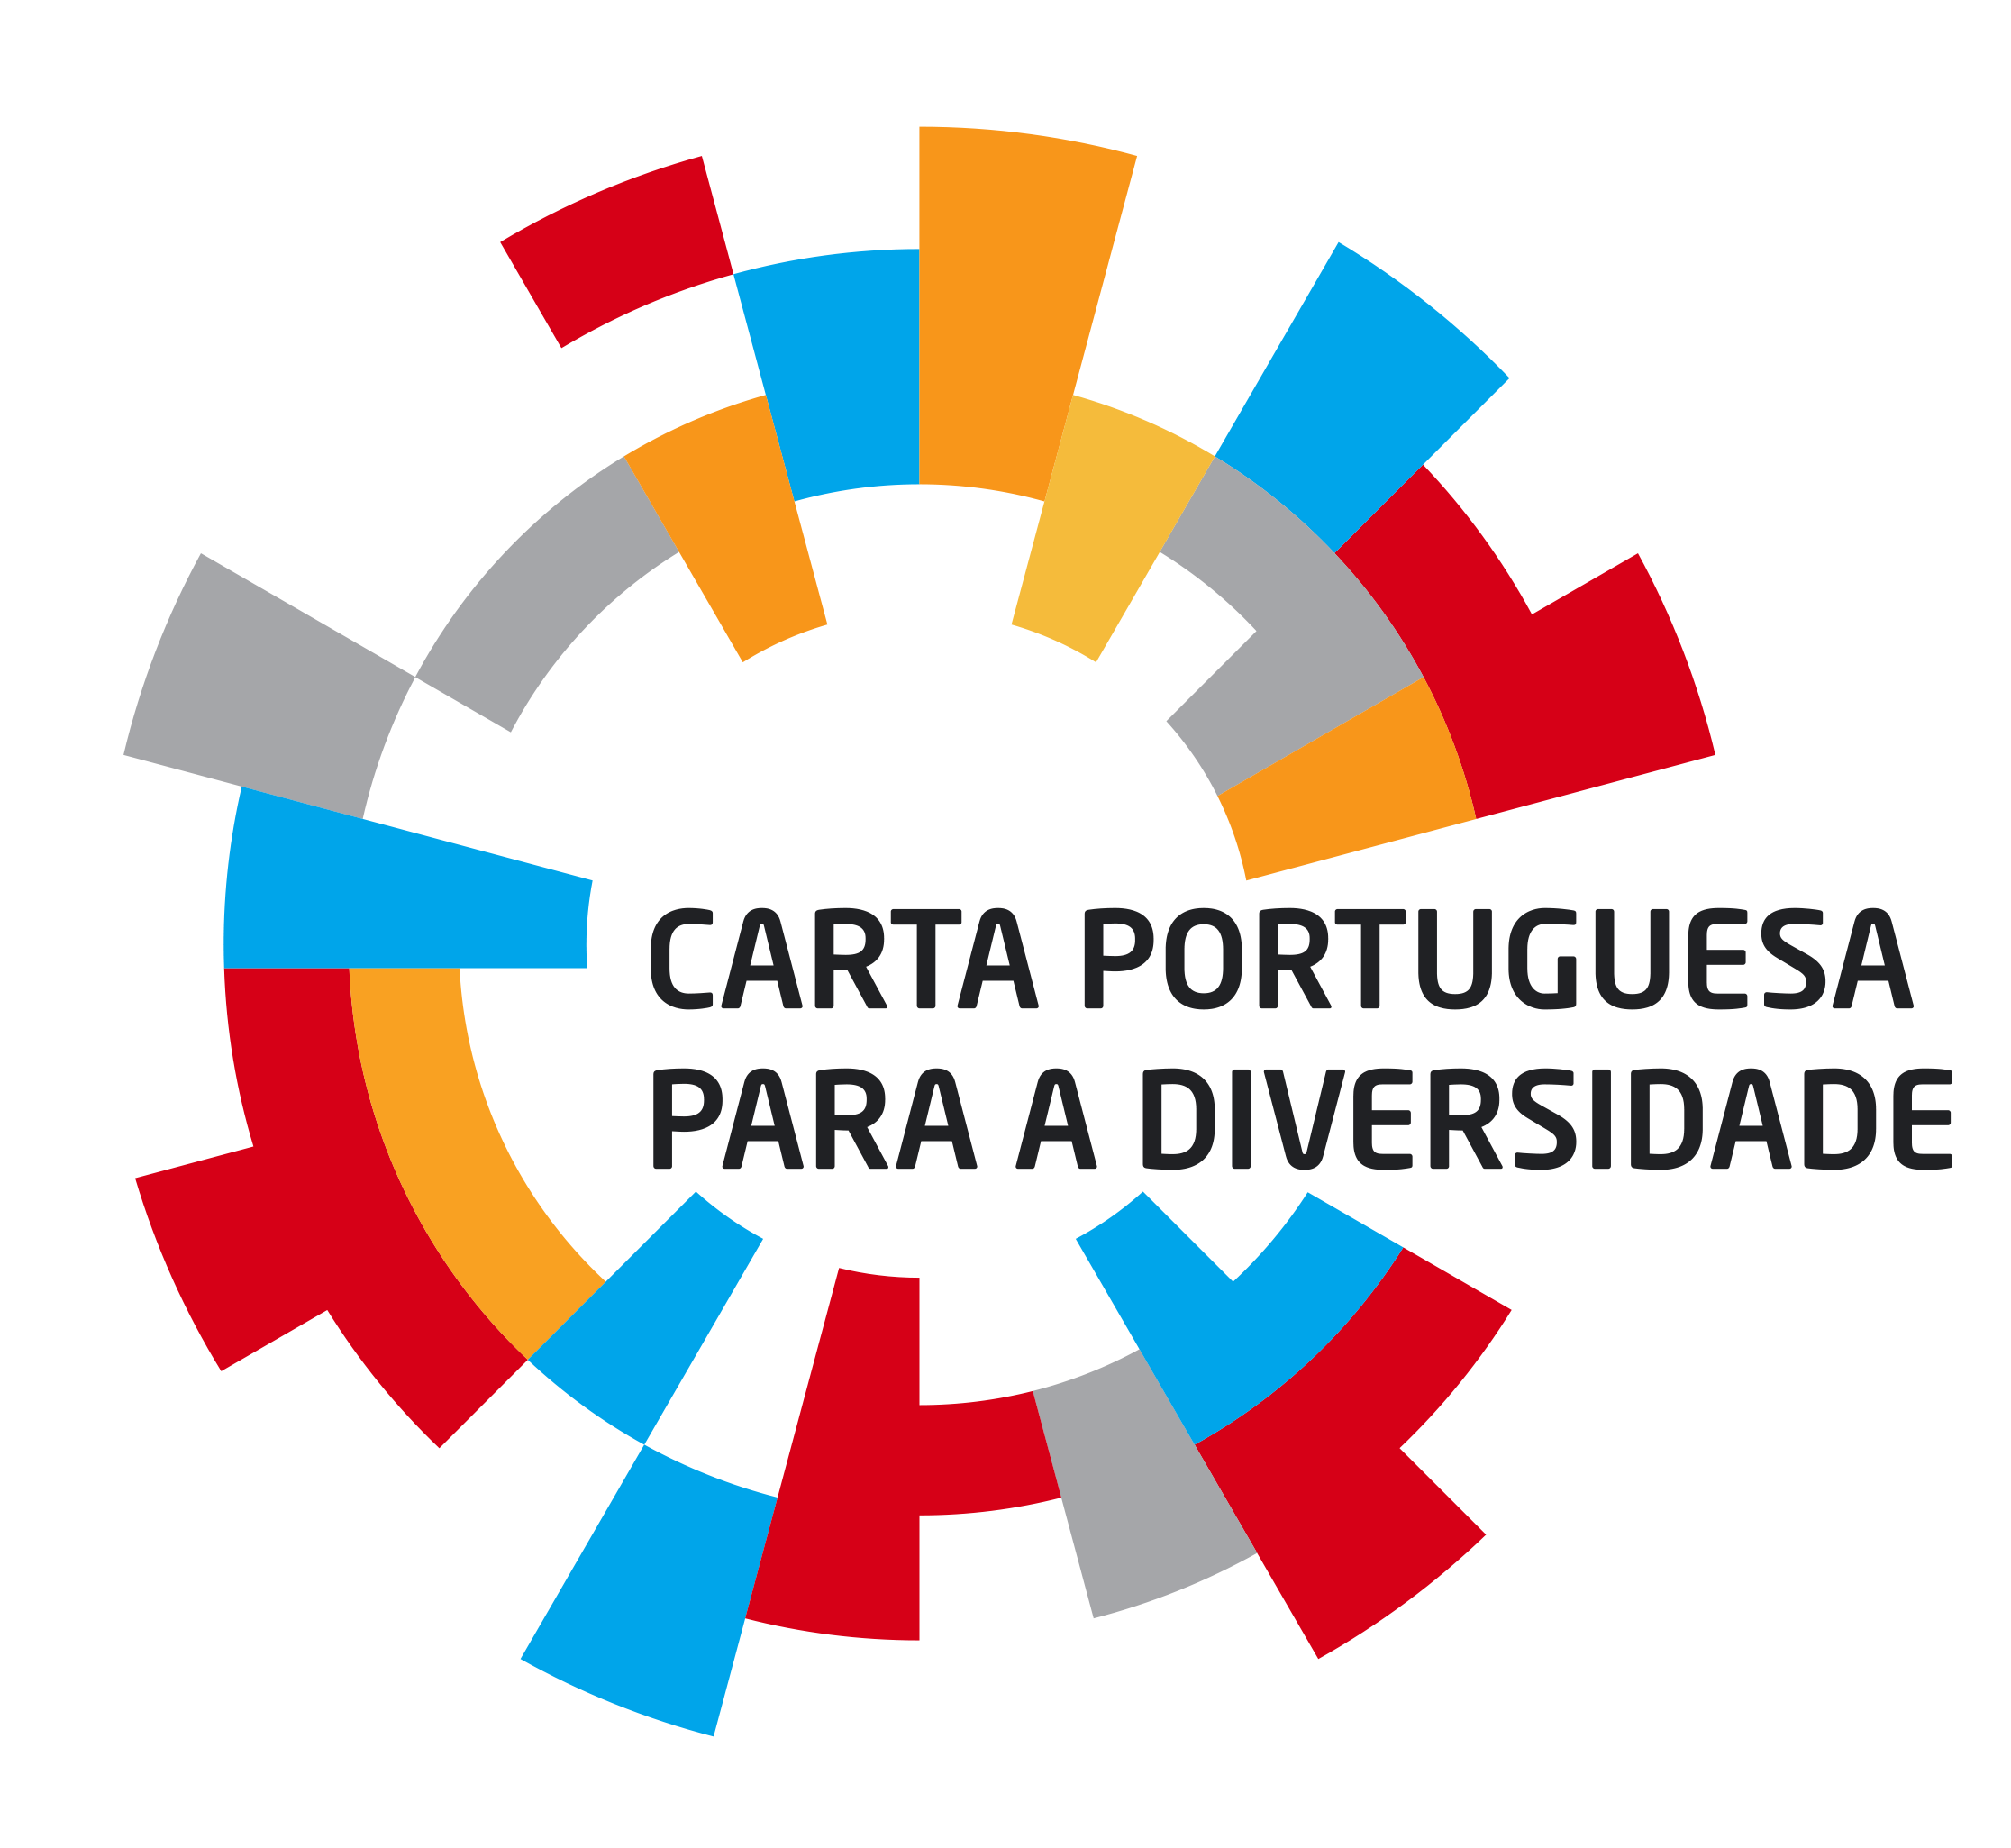 Diversity Charter Portugal